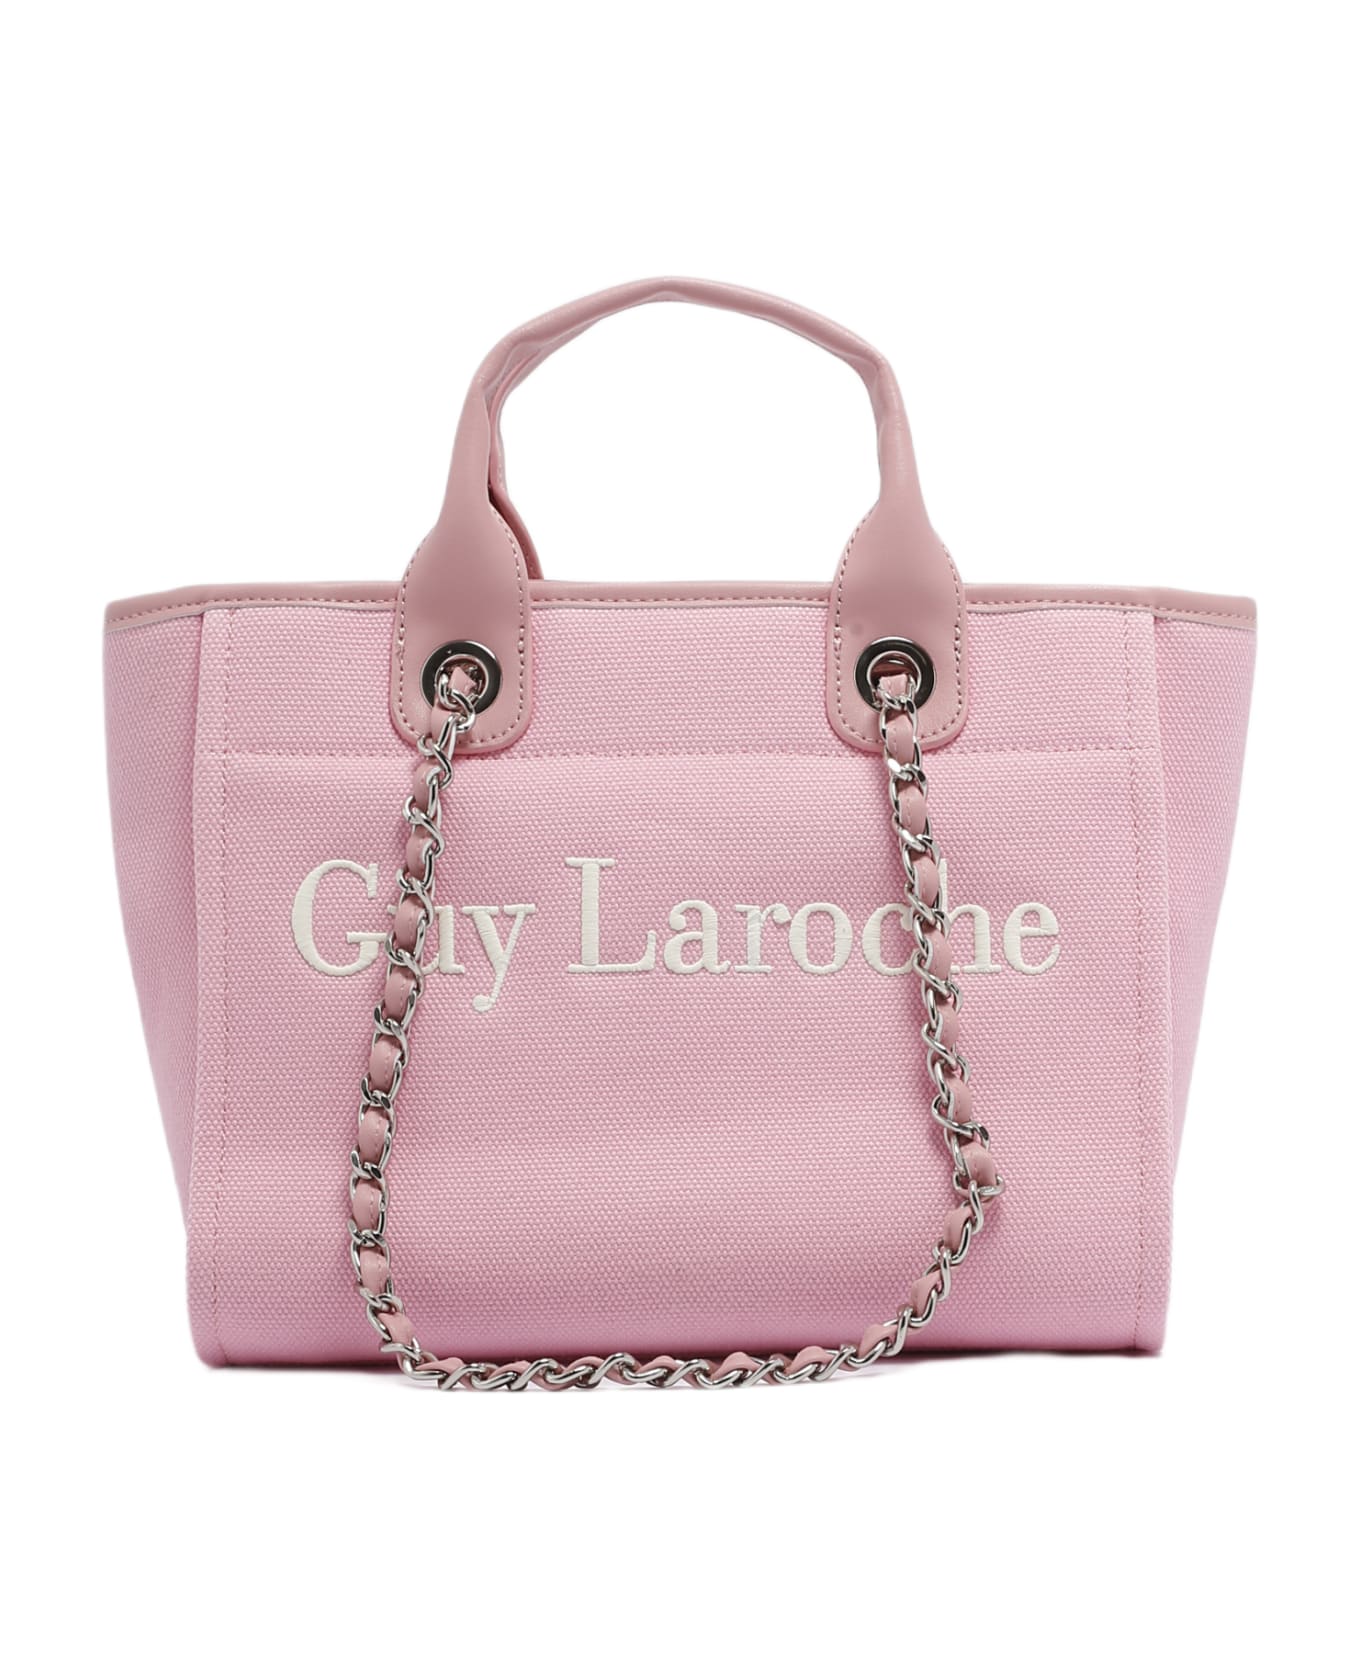 Guy Laroche Corinne Small Shopping Bag - ROSA